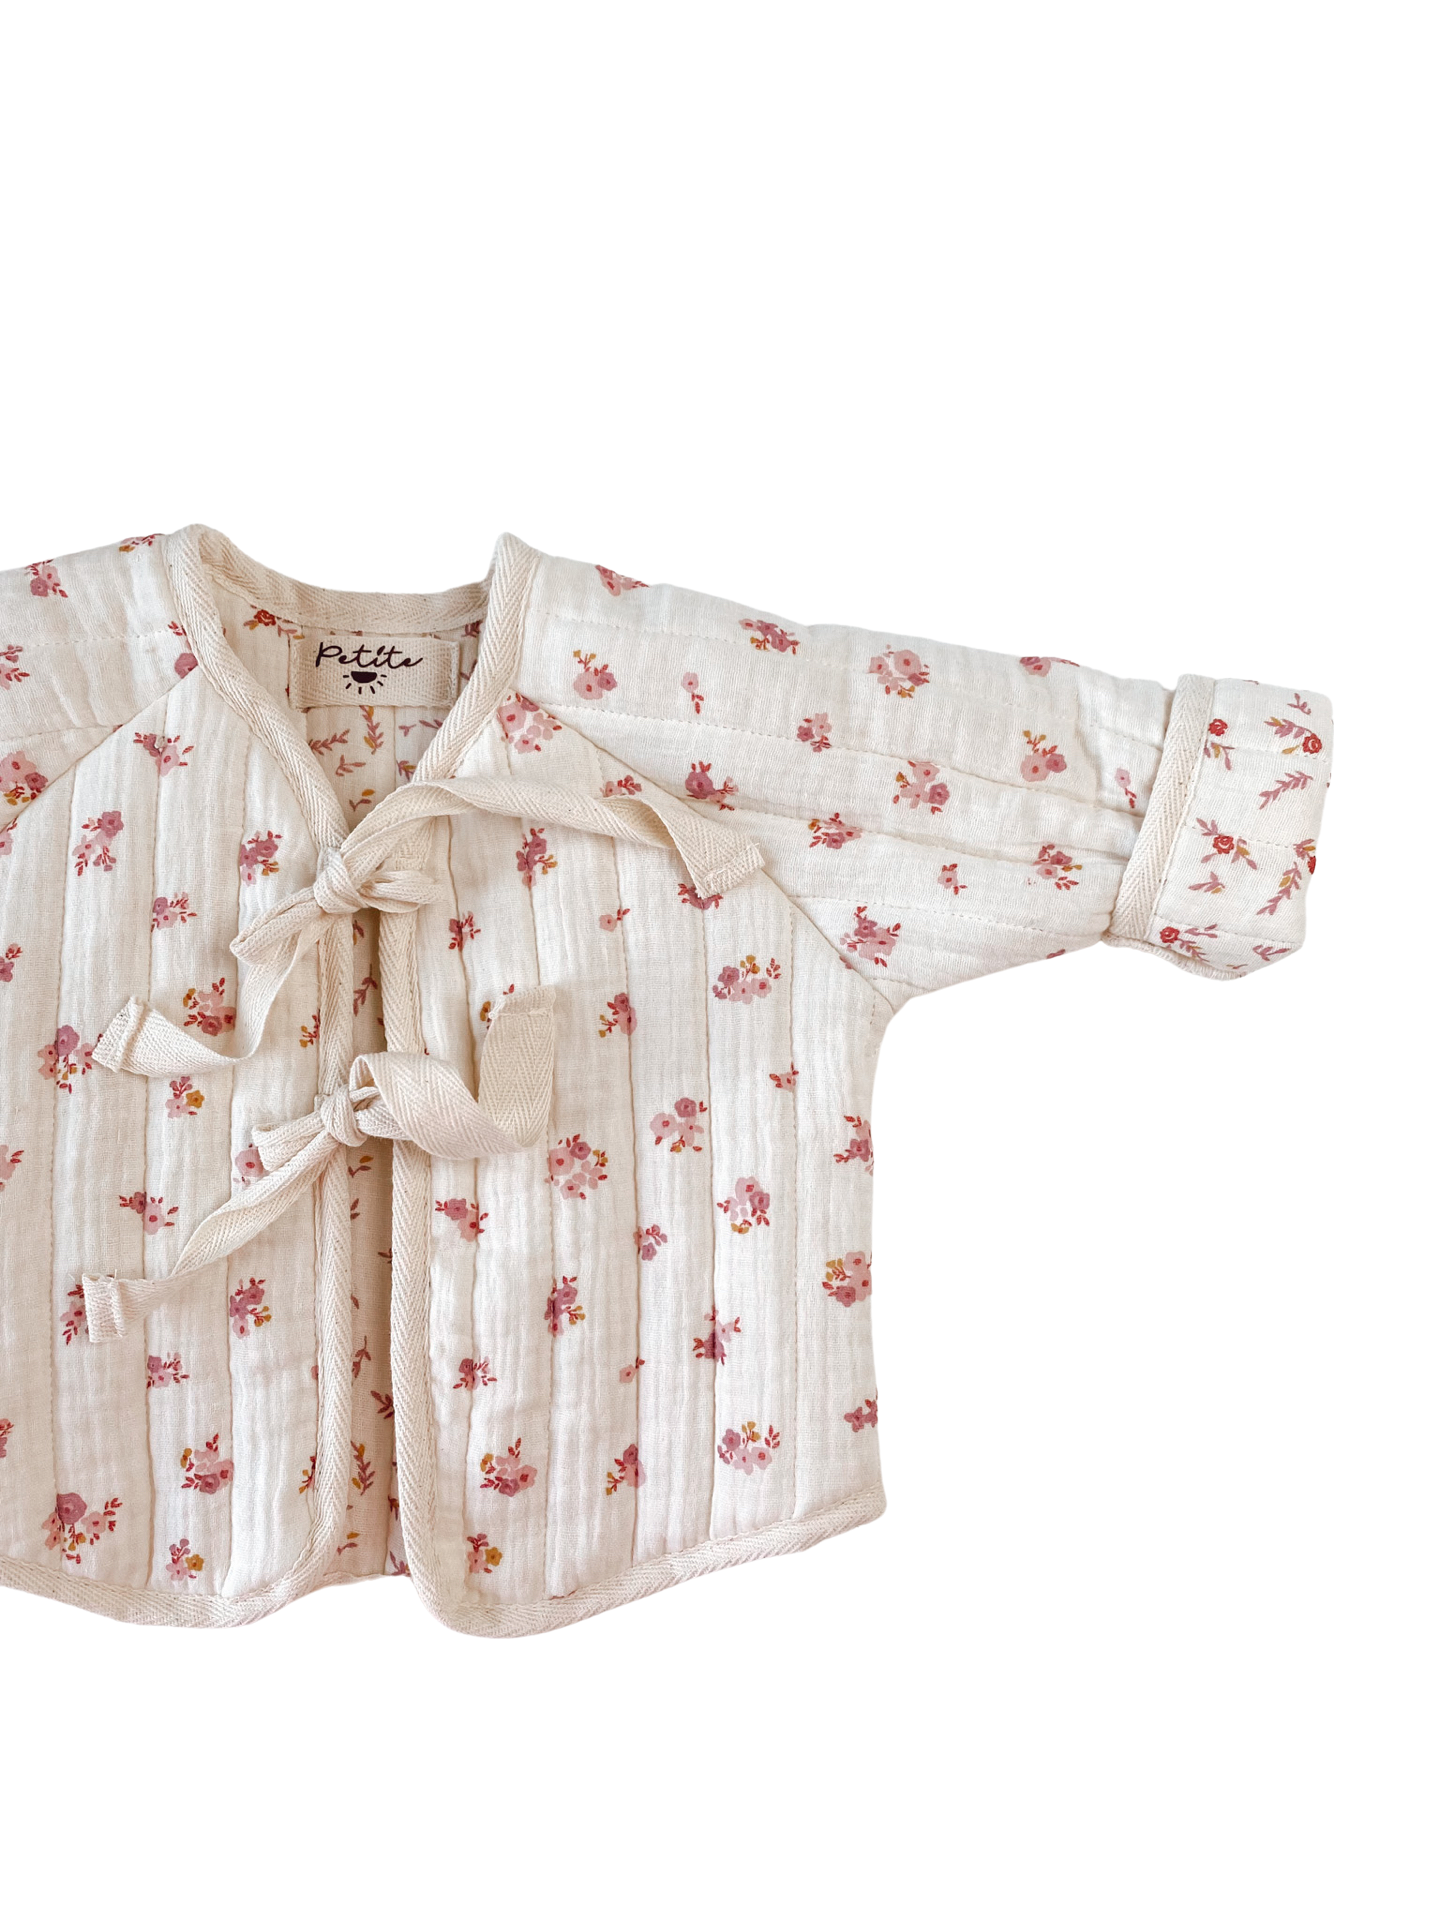 Baby & toddler quilted jacket - rose floral